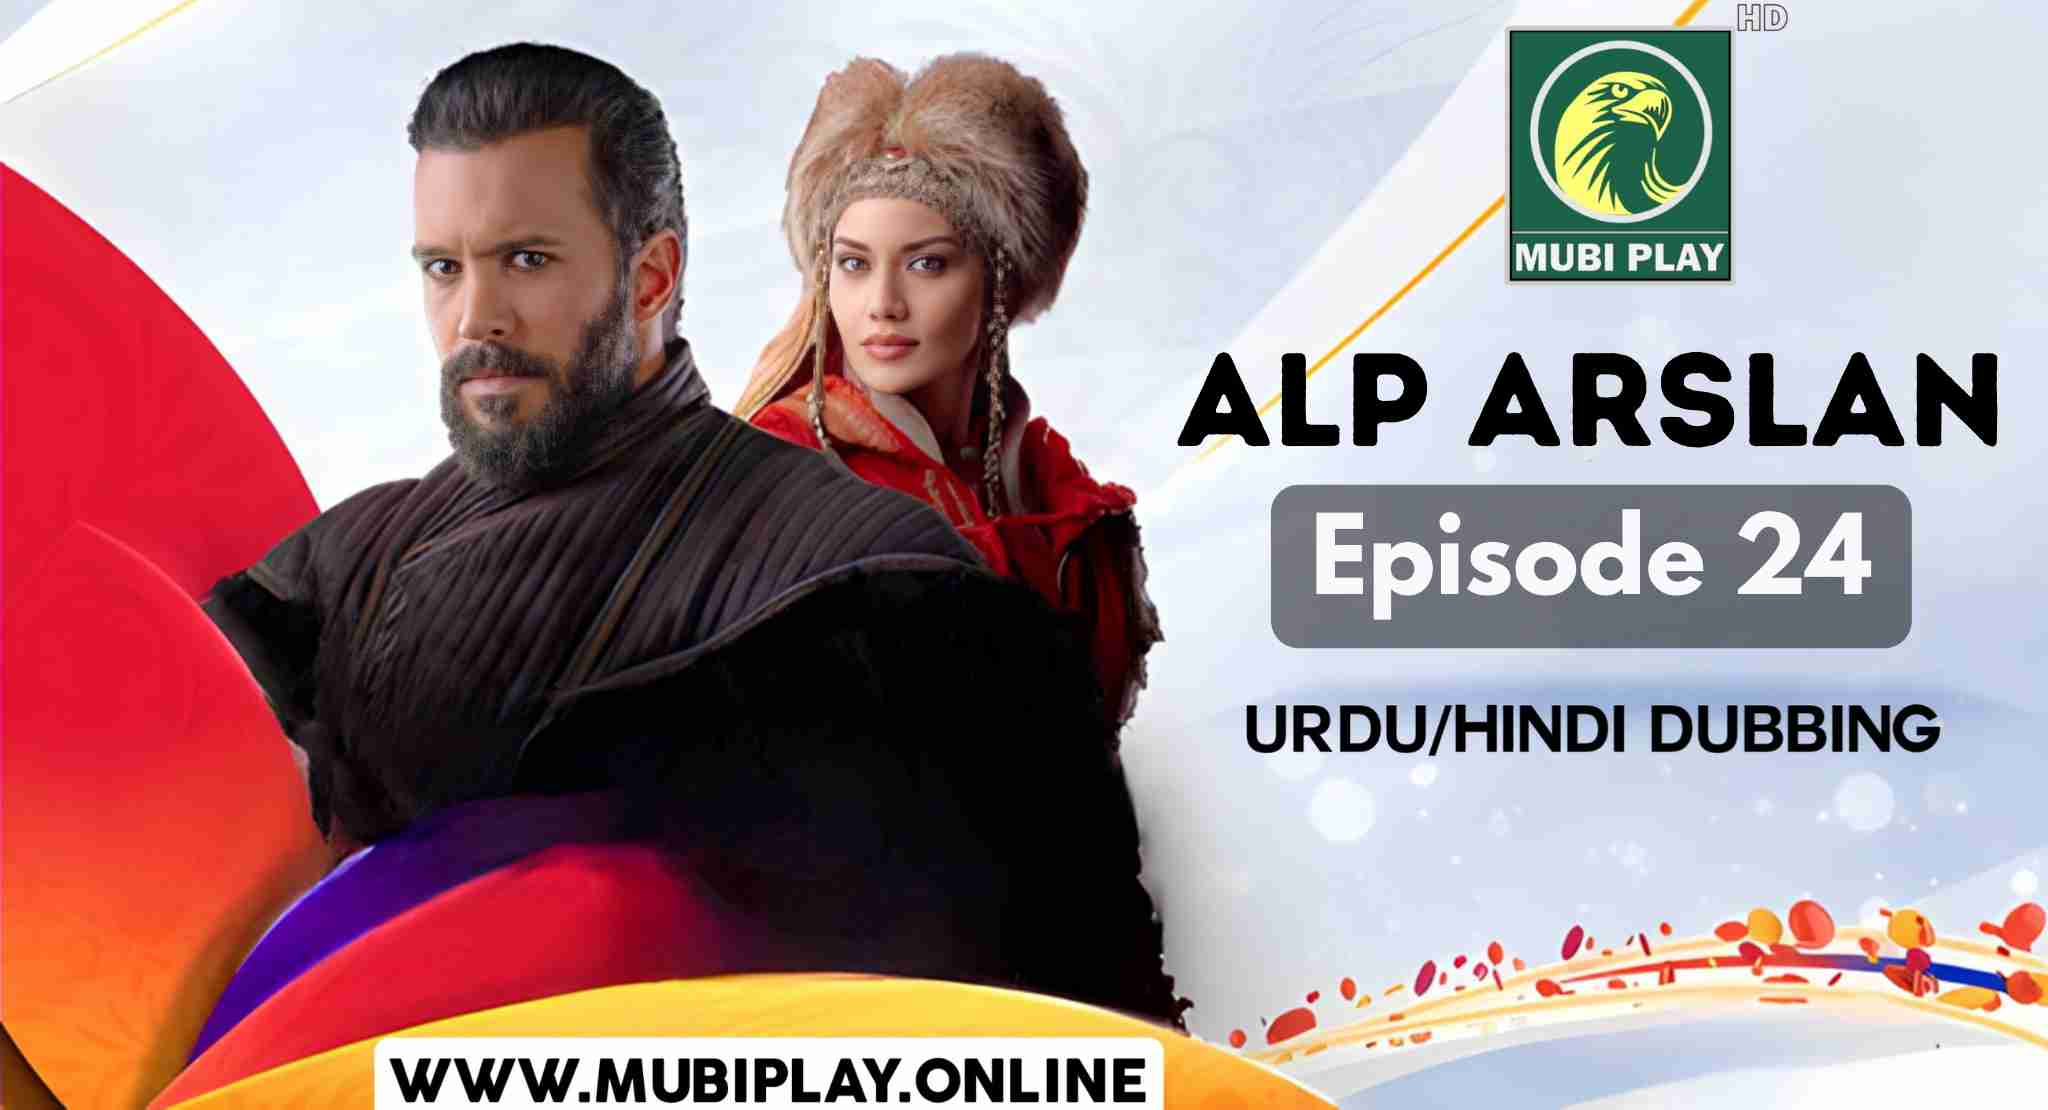 AlpArslan Episode 24 Urdu/Hindi Dubbing by MubiPlay